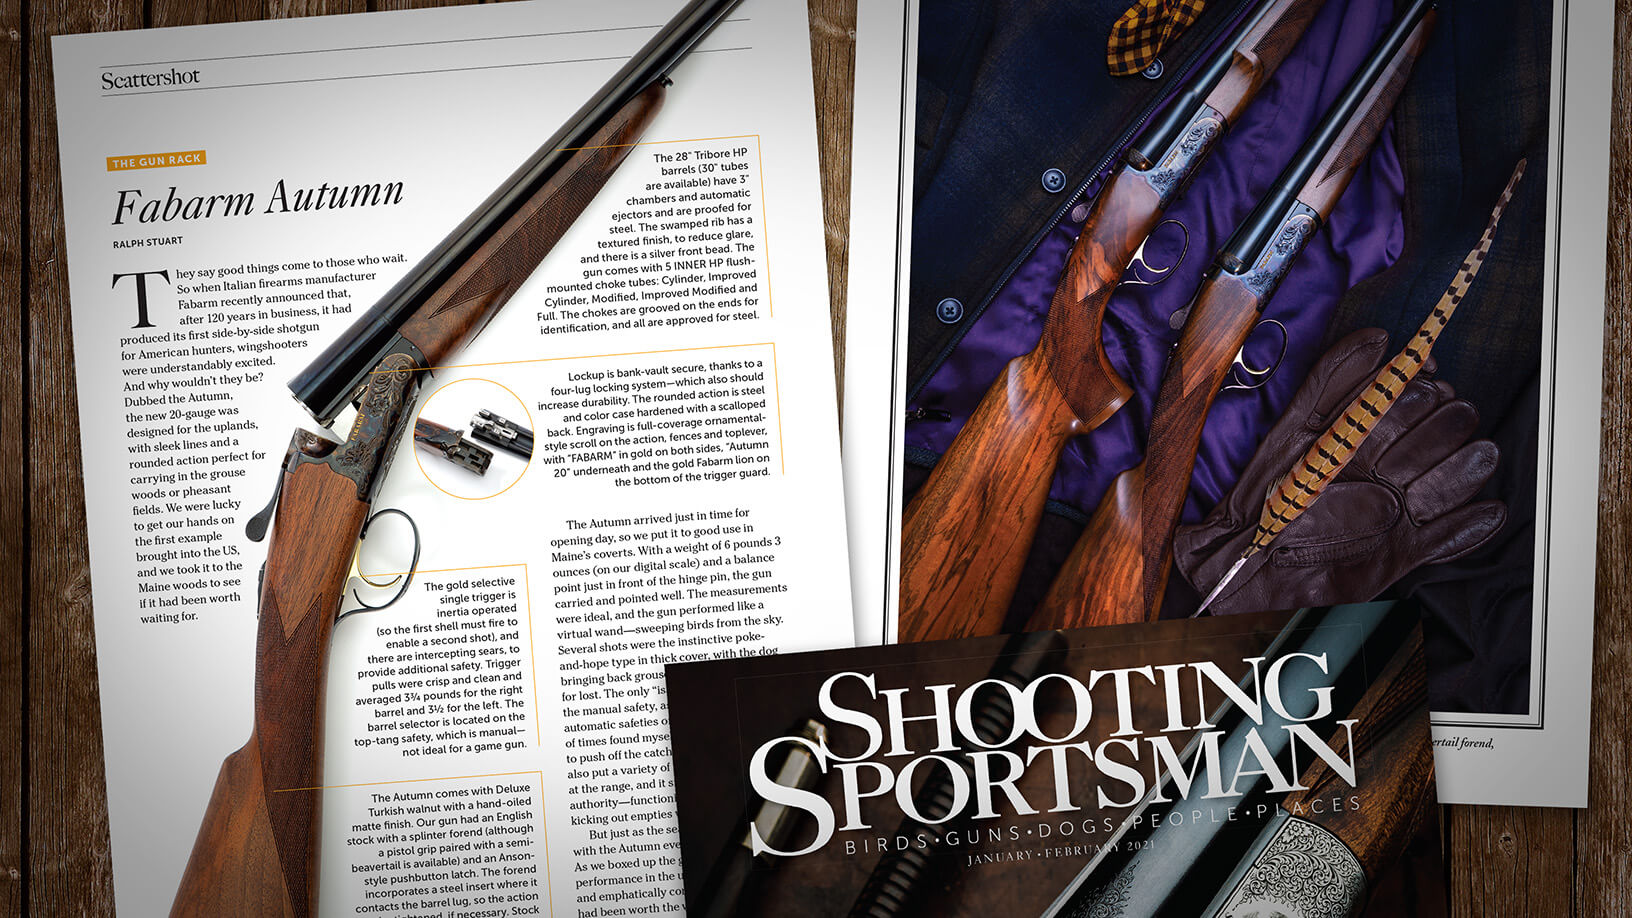 [Shooting Sportsman 01:21] The Gun Rack: Fabarm Autumn by Ralph Stuart